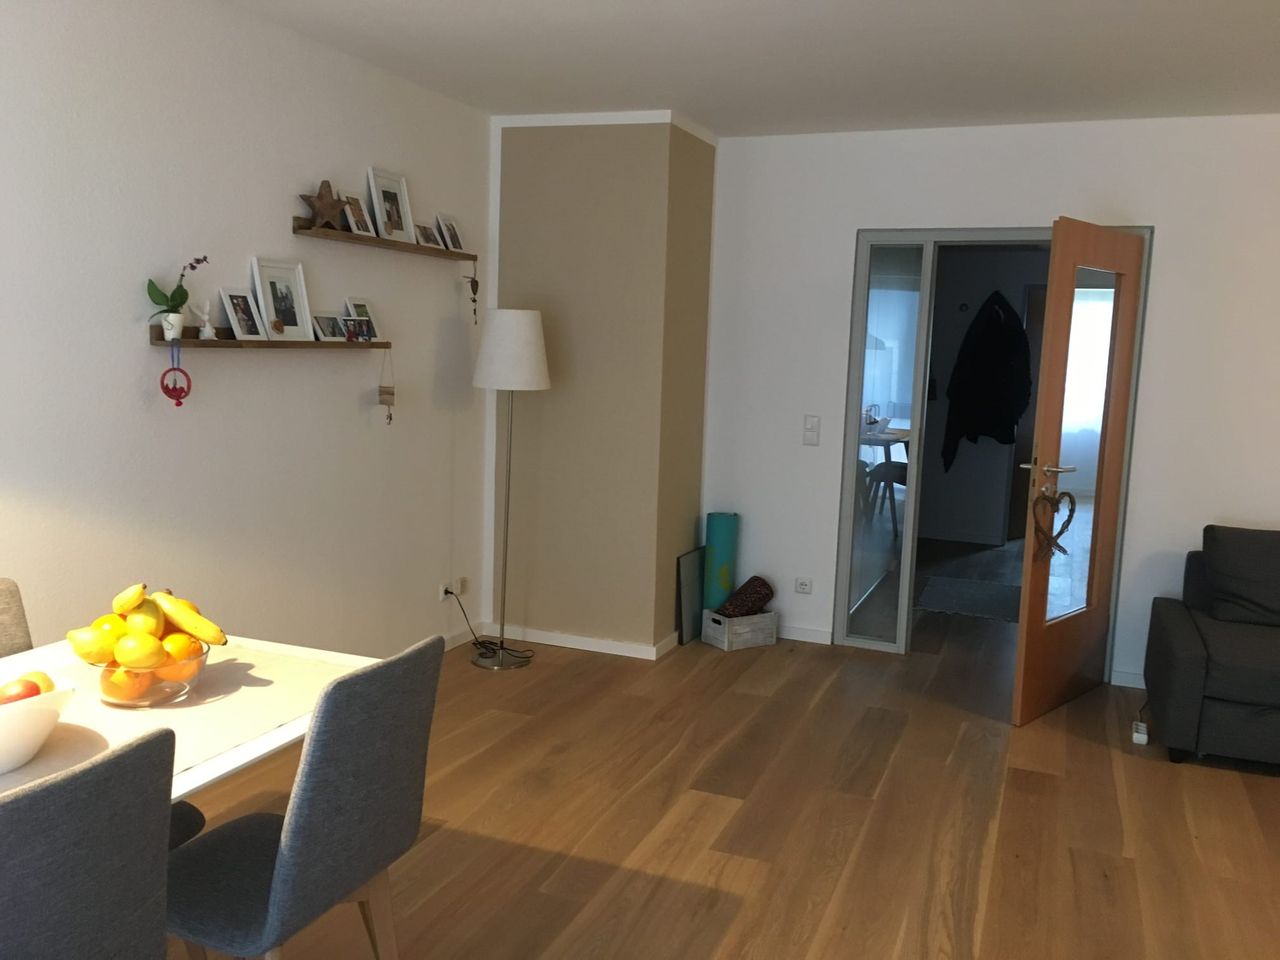 New apartment in good area düsseldorf-oberkassel , fully new furniture on request